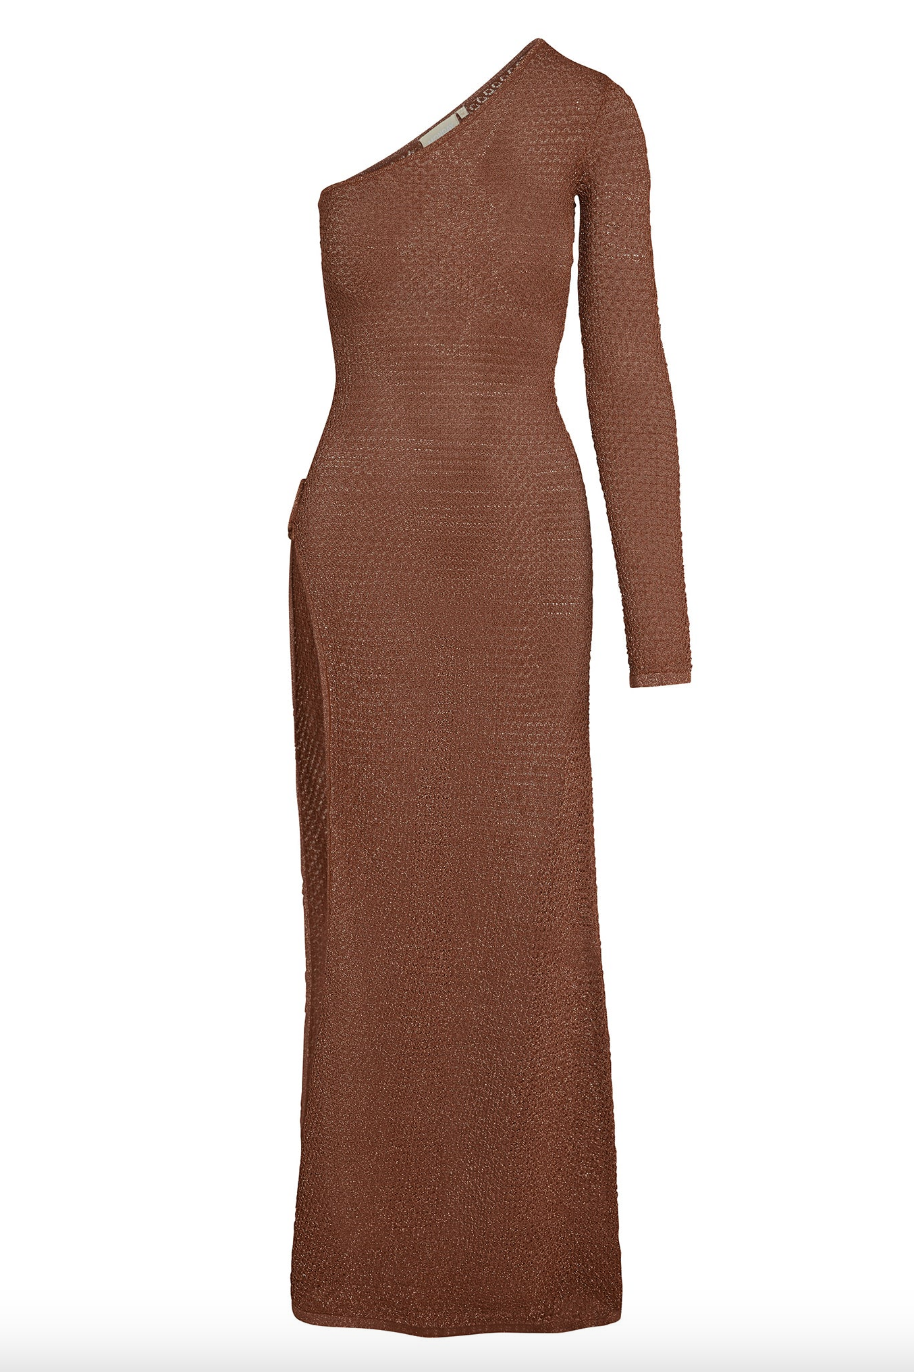 Kiki Barth's Brown Crochet One Shoulder Dress